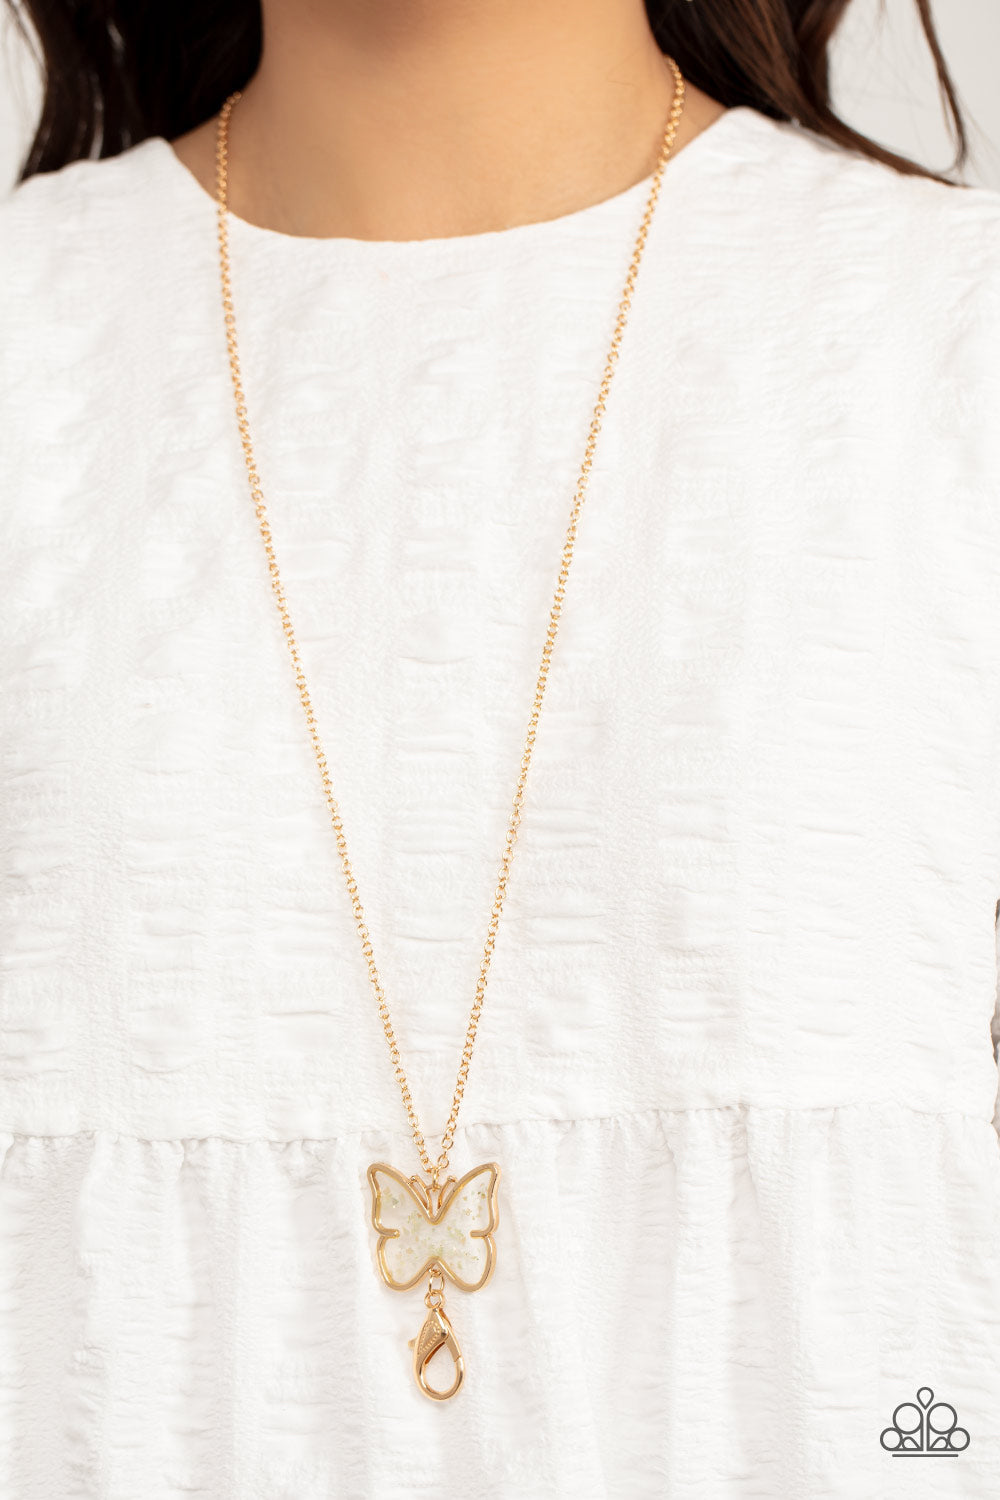 Paparazzi Accessories - Gives Me Butterflies - Gold Butterflies Necklace